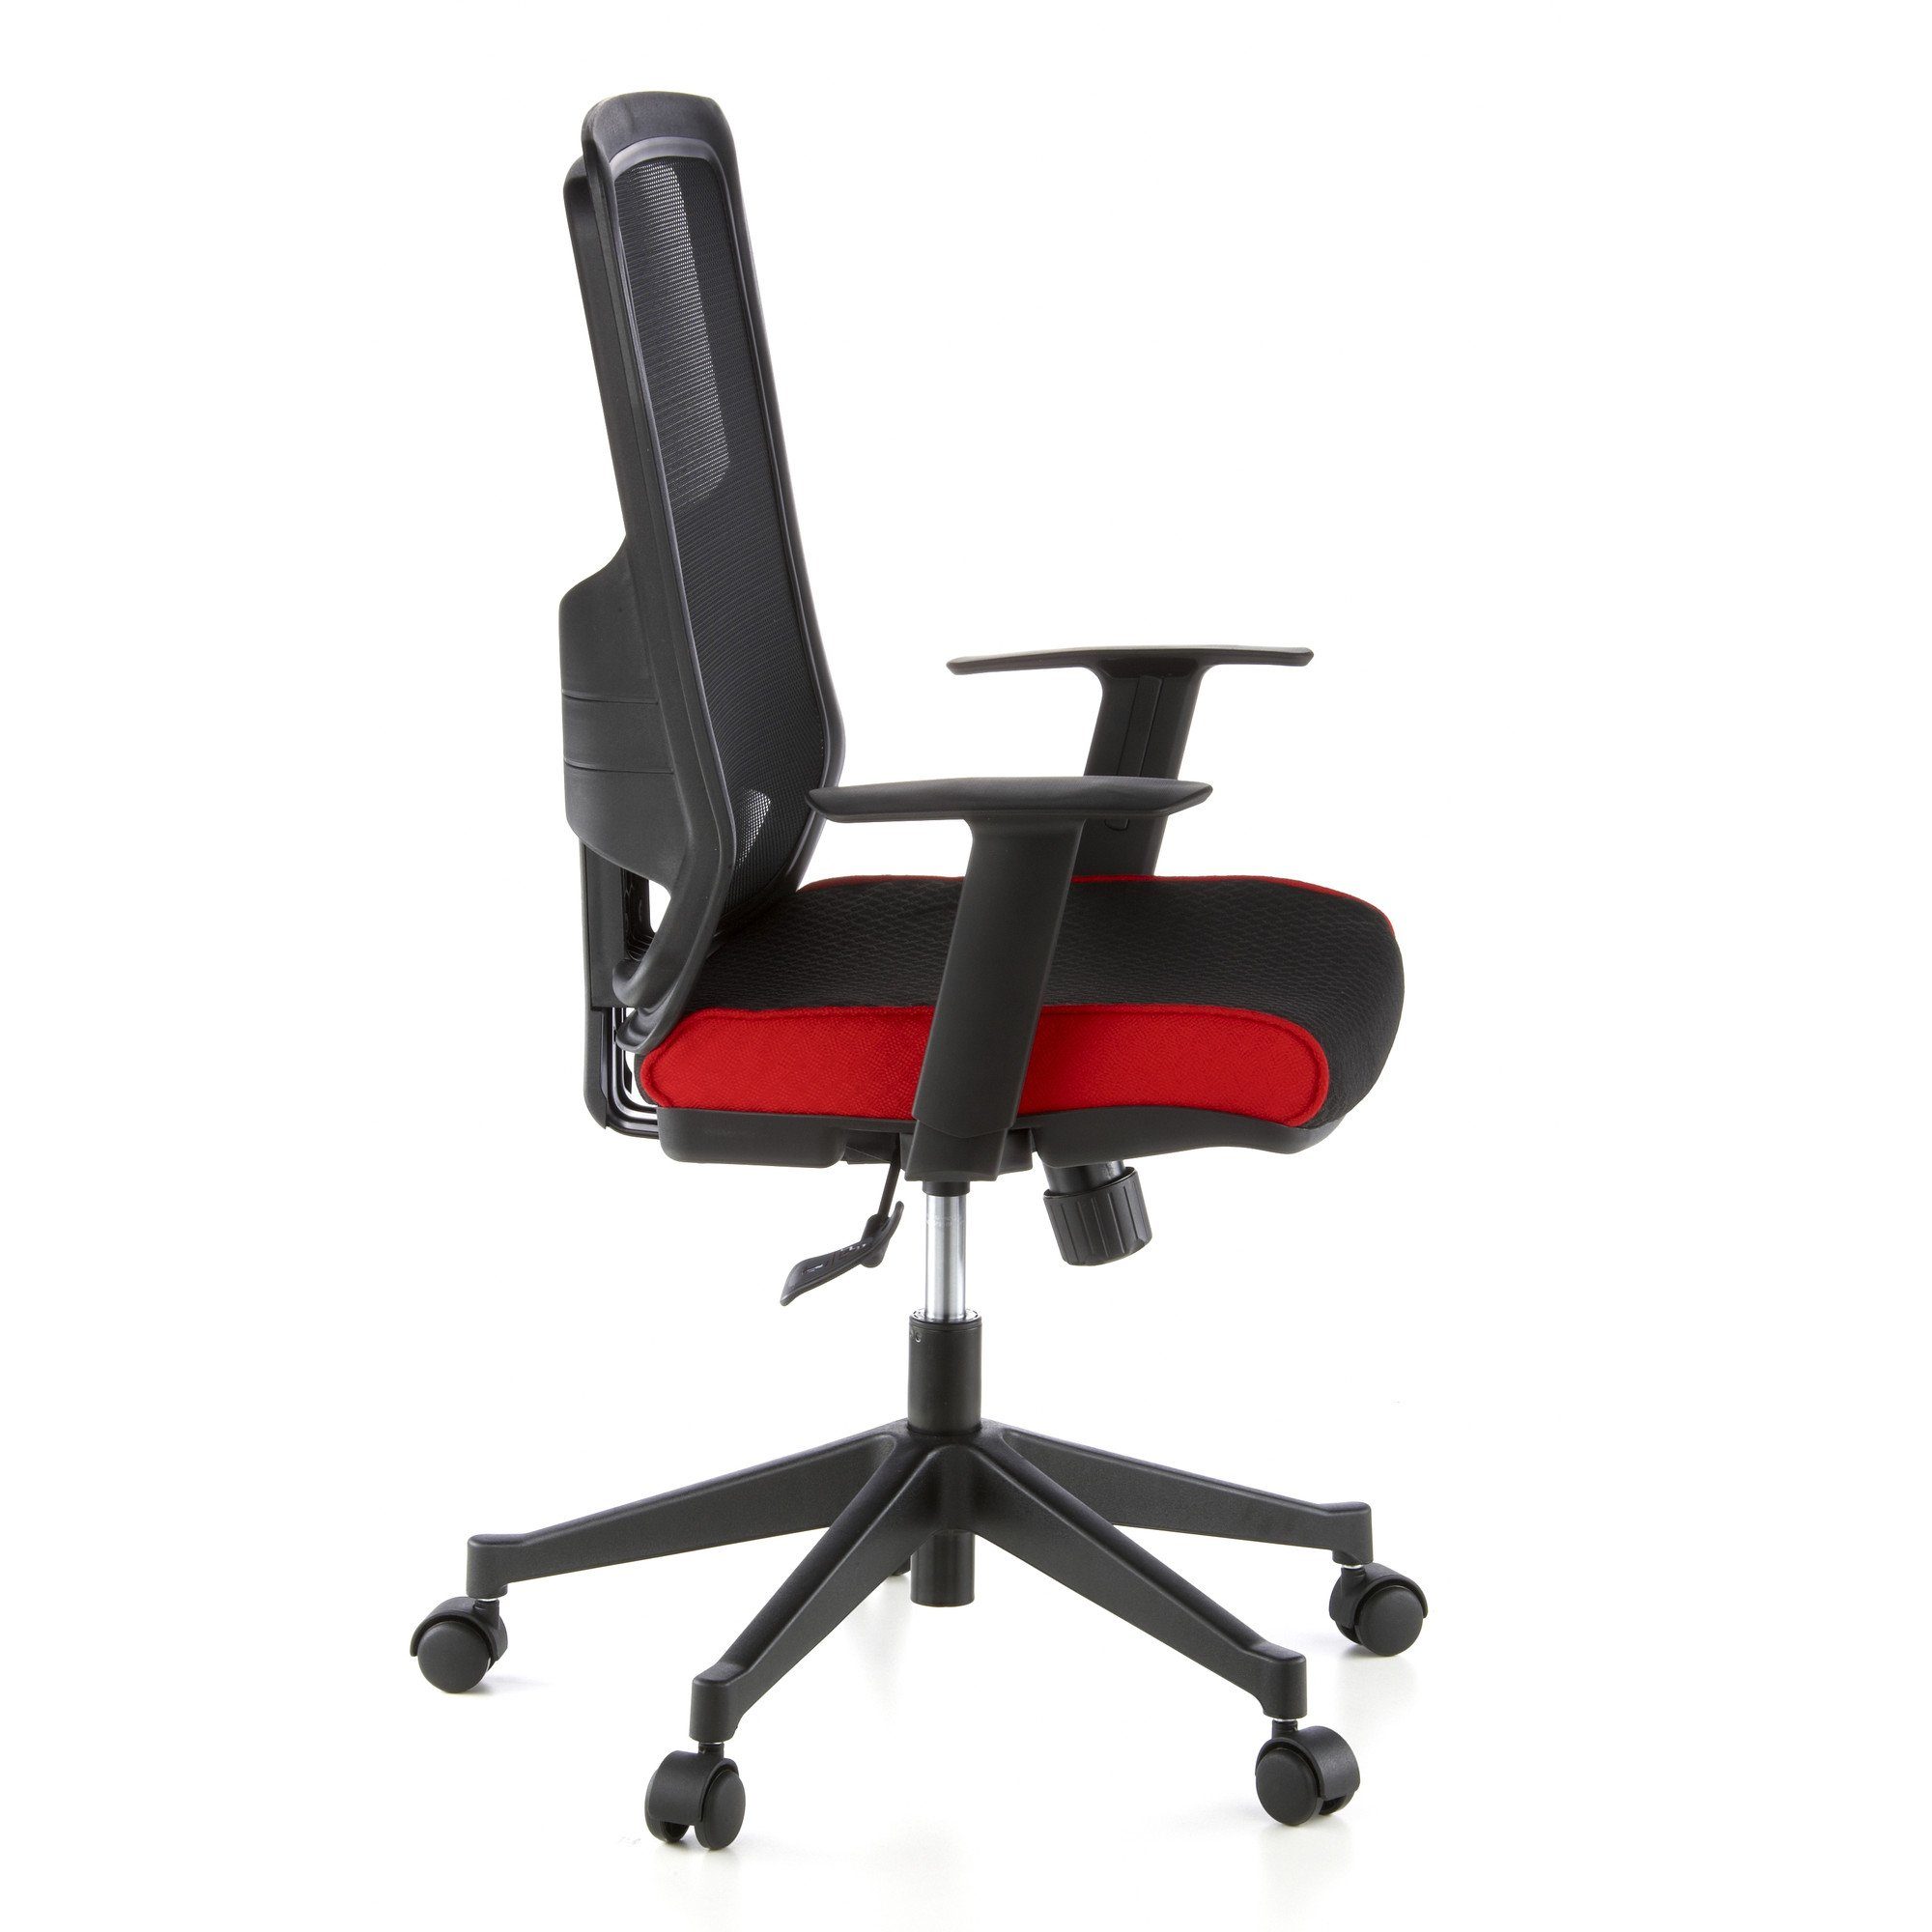 Stoff (1 ergonomisch OFFICE Profi Drehstuhl LAVITA St), hjh Schreibtischstuhl Bürostuhl Schwarz/Rot